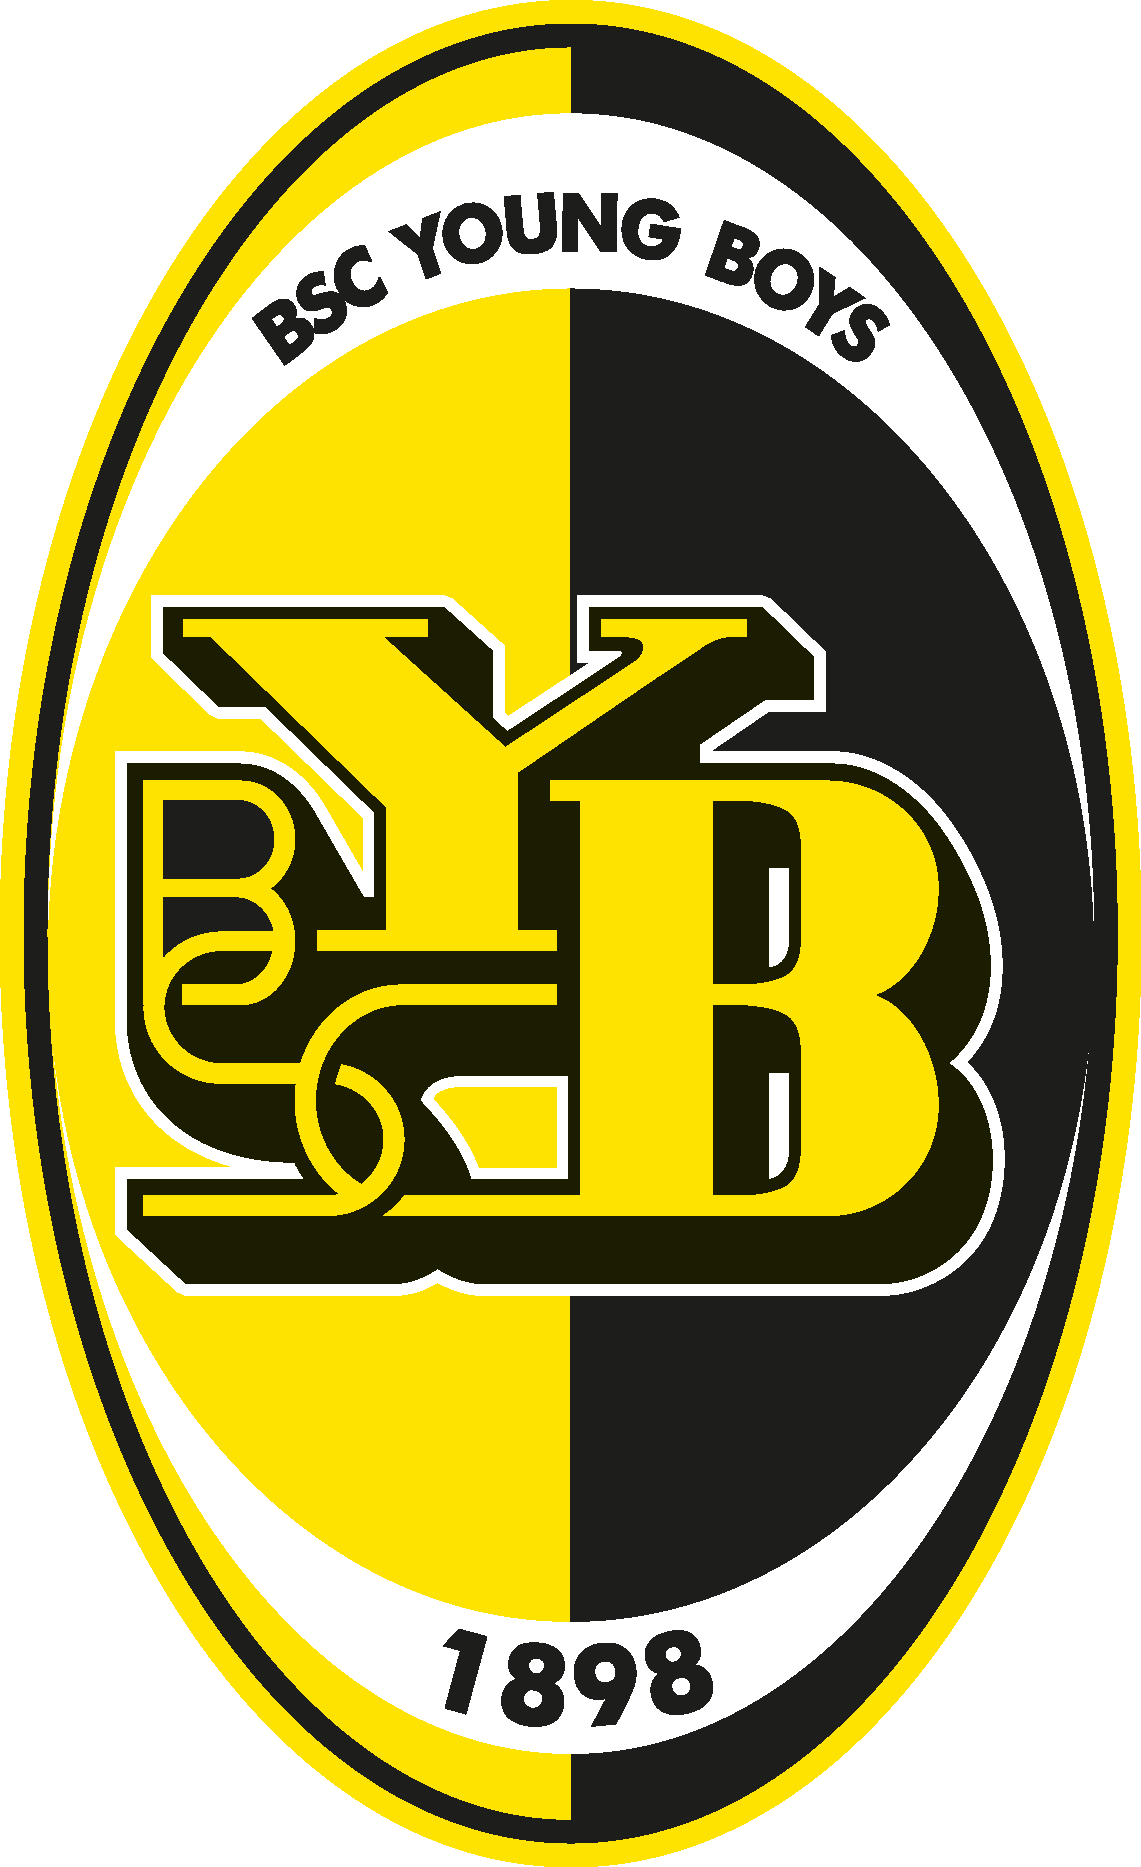 ФК Йонг Бойз. BSC logo. BSS logo. The boys logo.